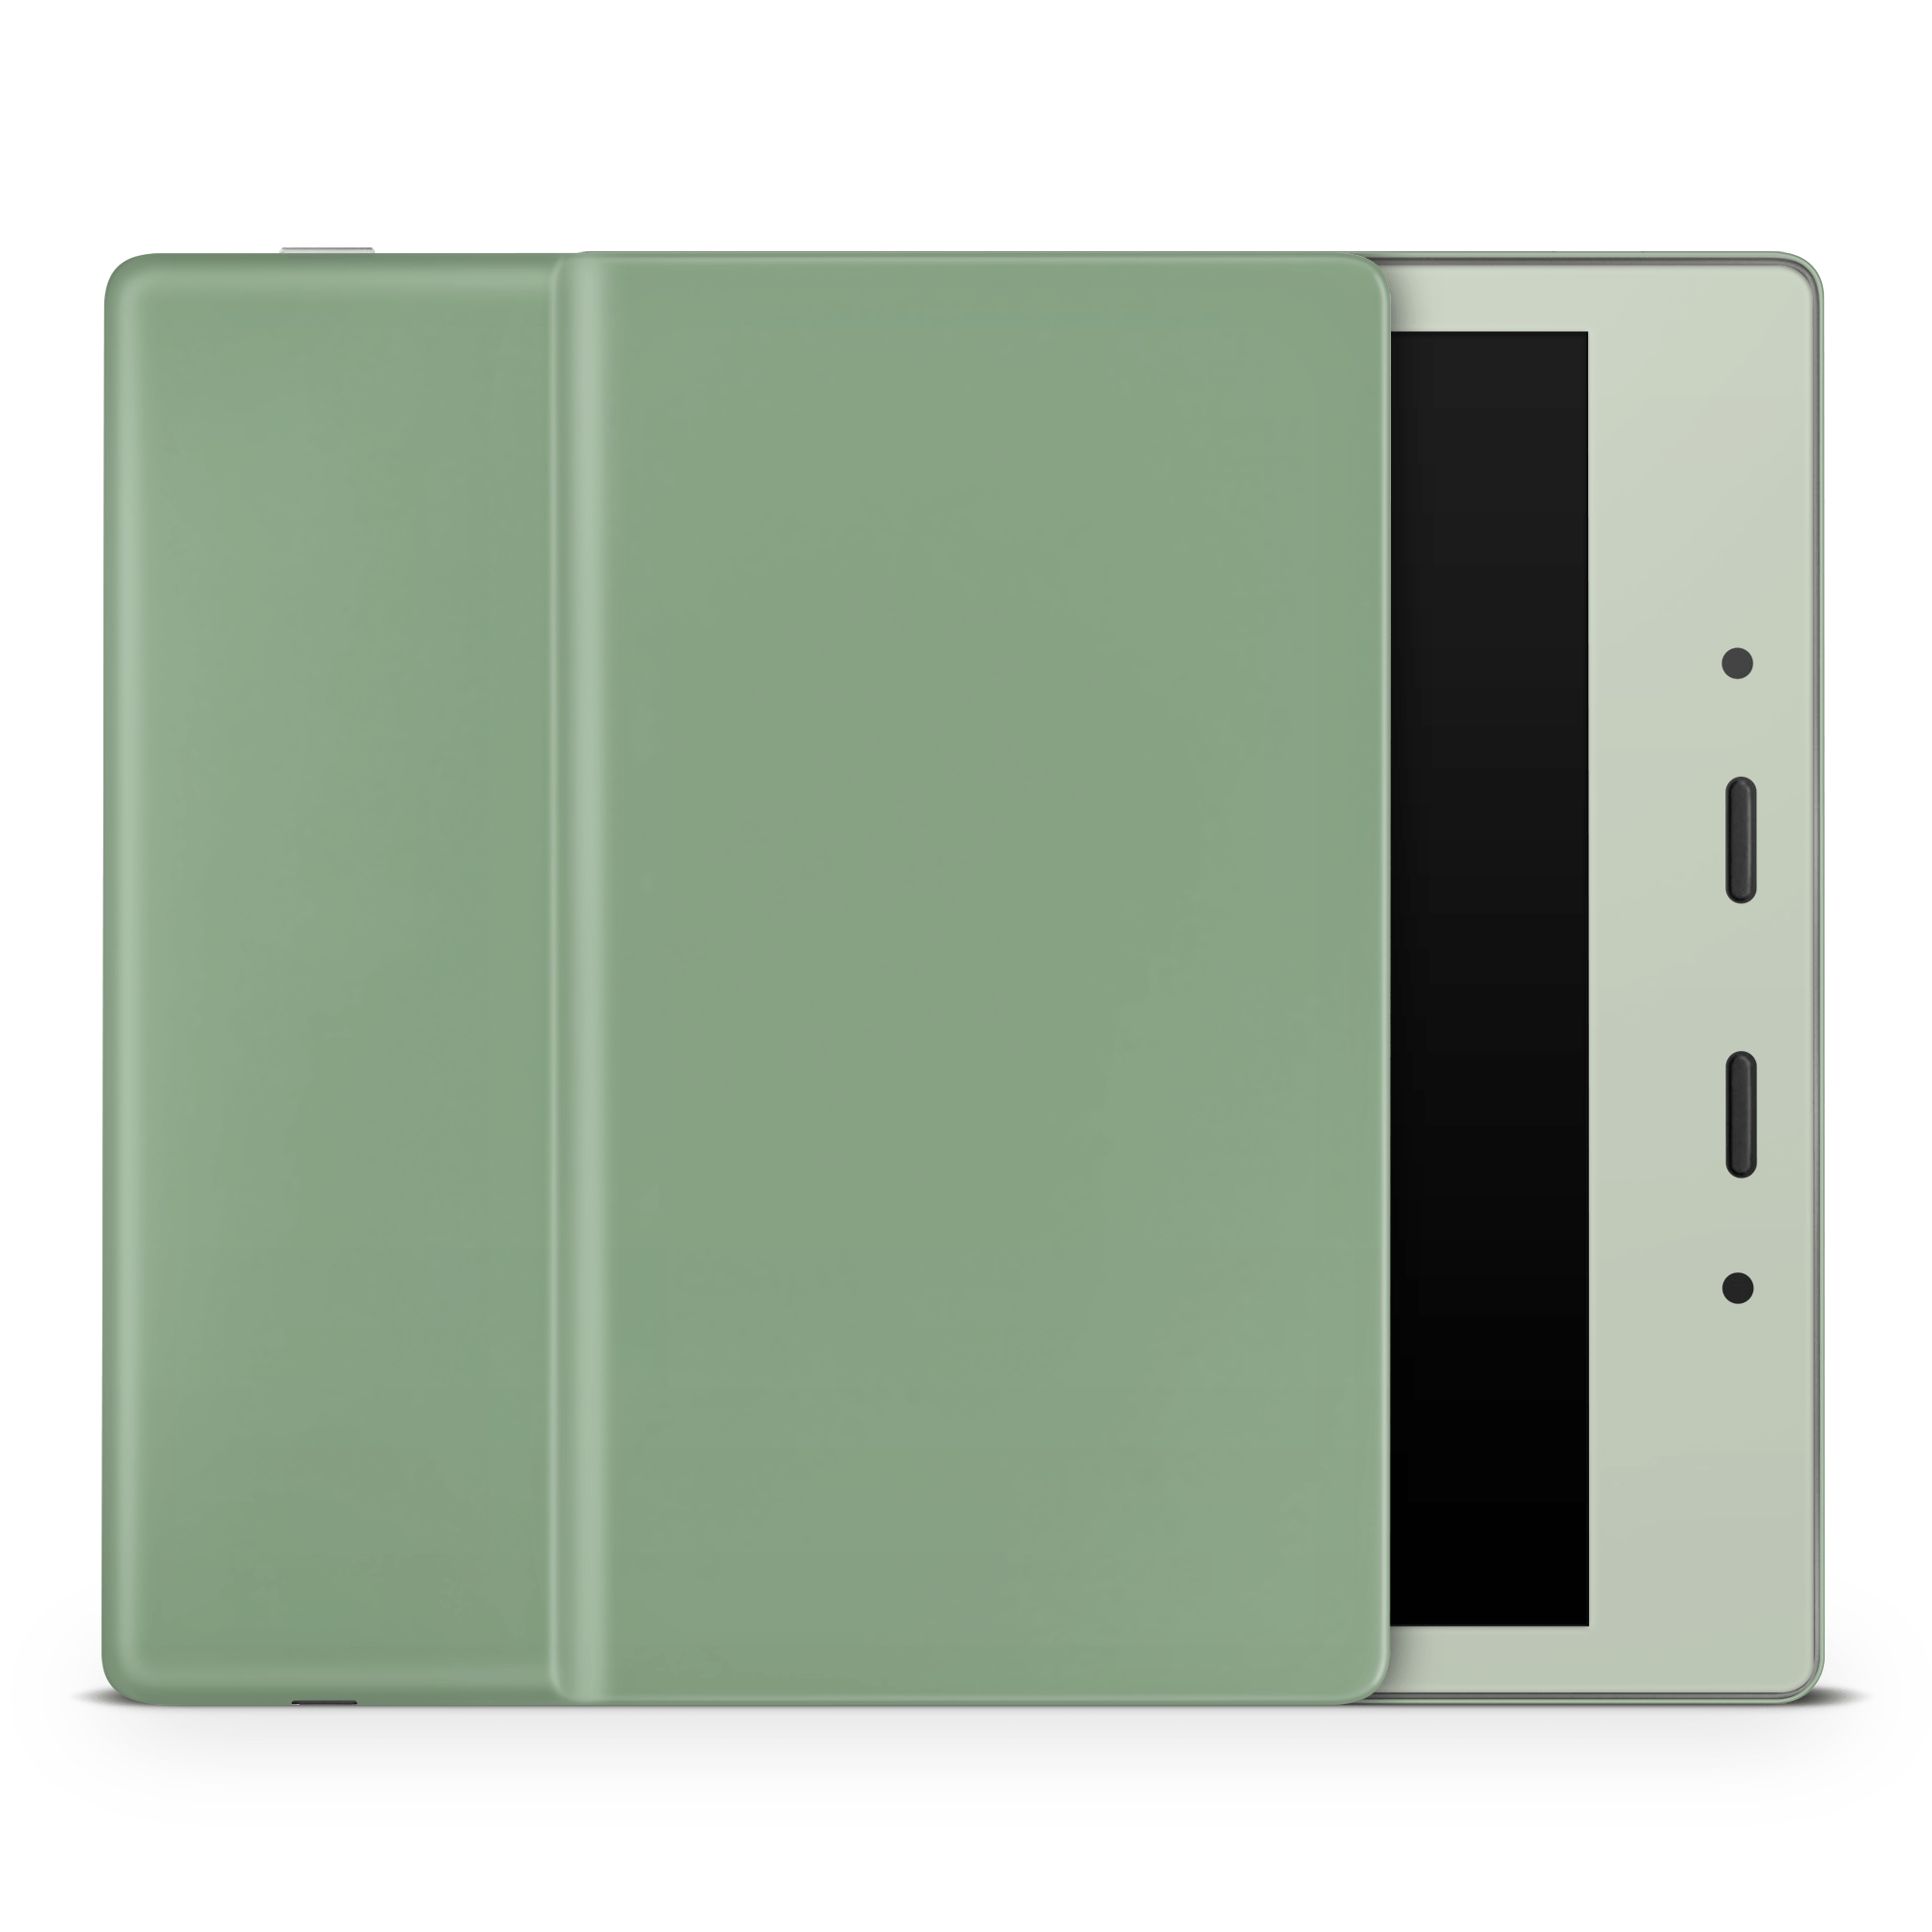 Timberland Green Amazon Kindle Skins